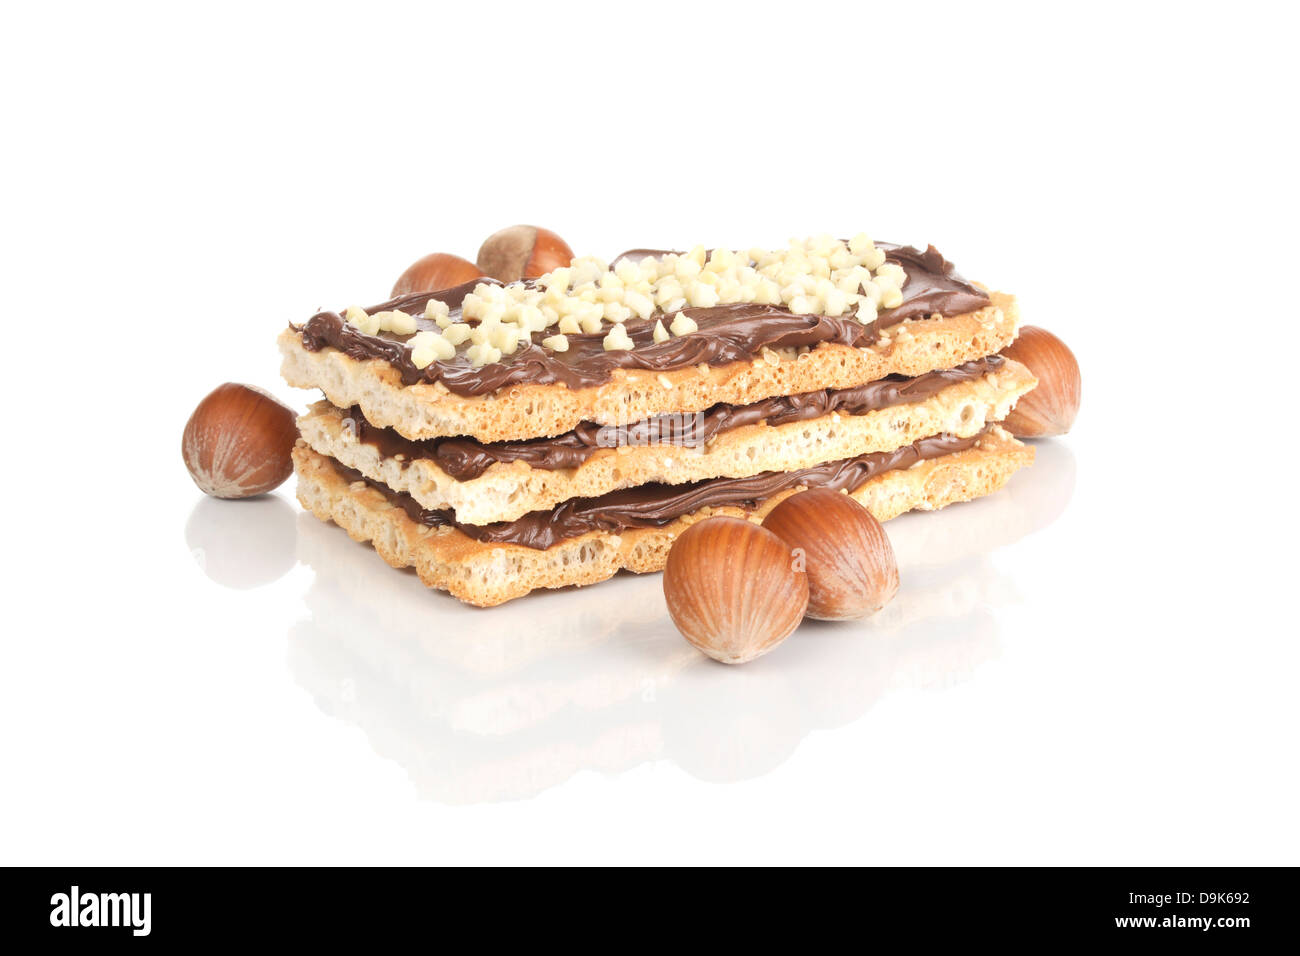 Nut nougat cuts with hazelnuts Stock Photo